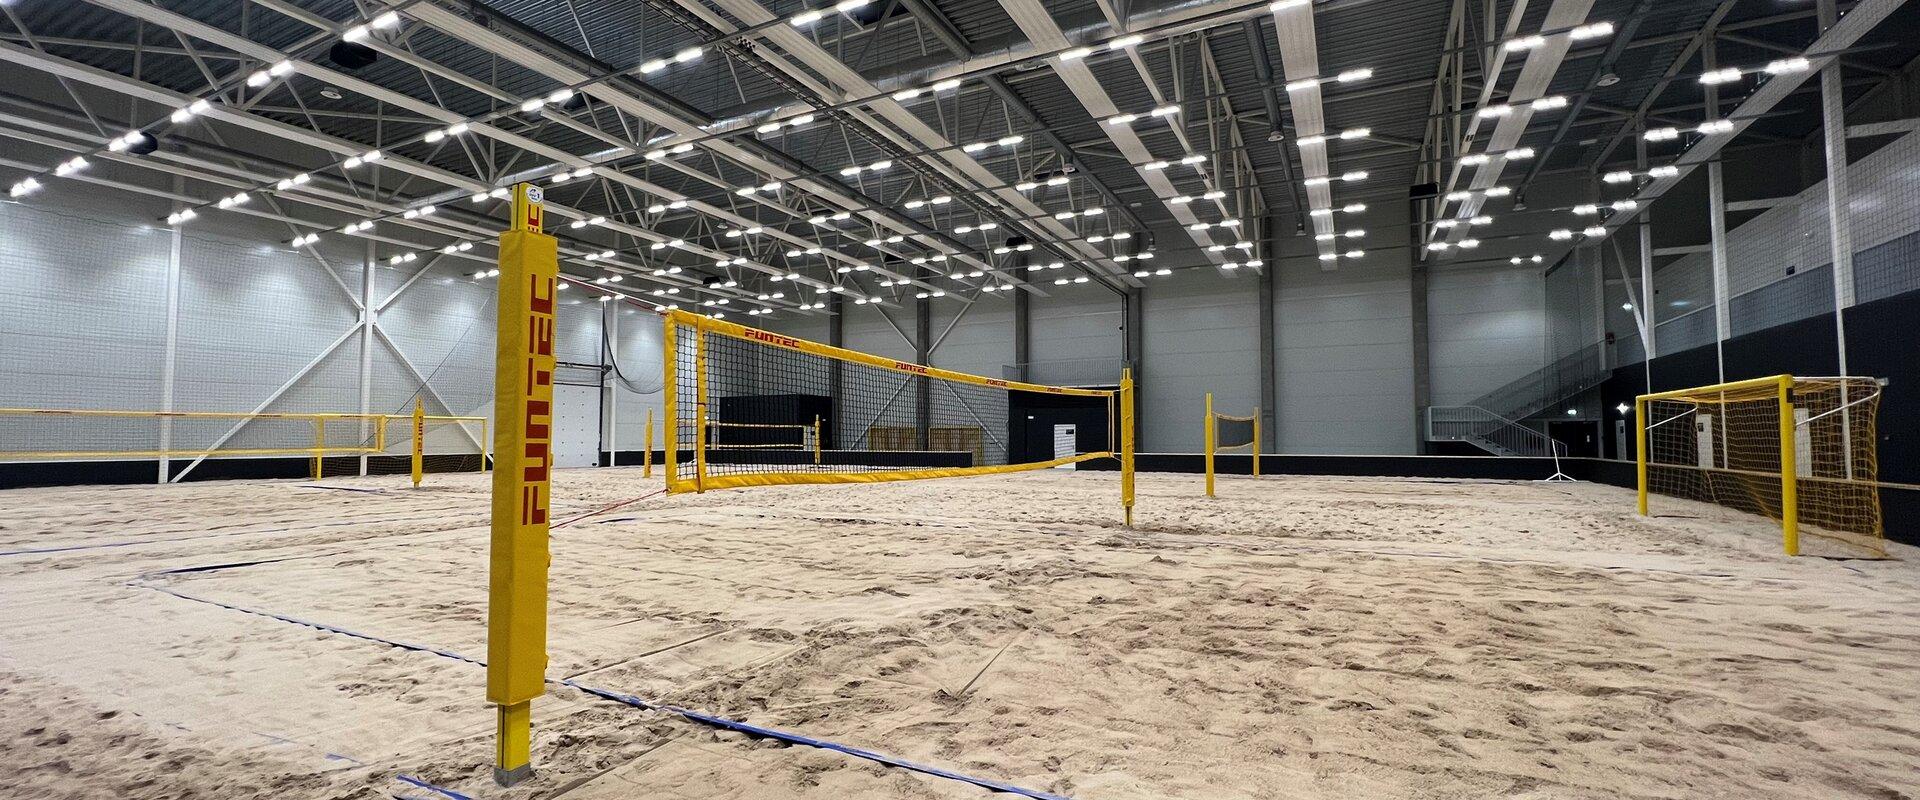 Jõulumäe indoor beach arena and sand courts